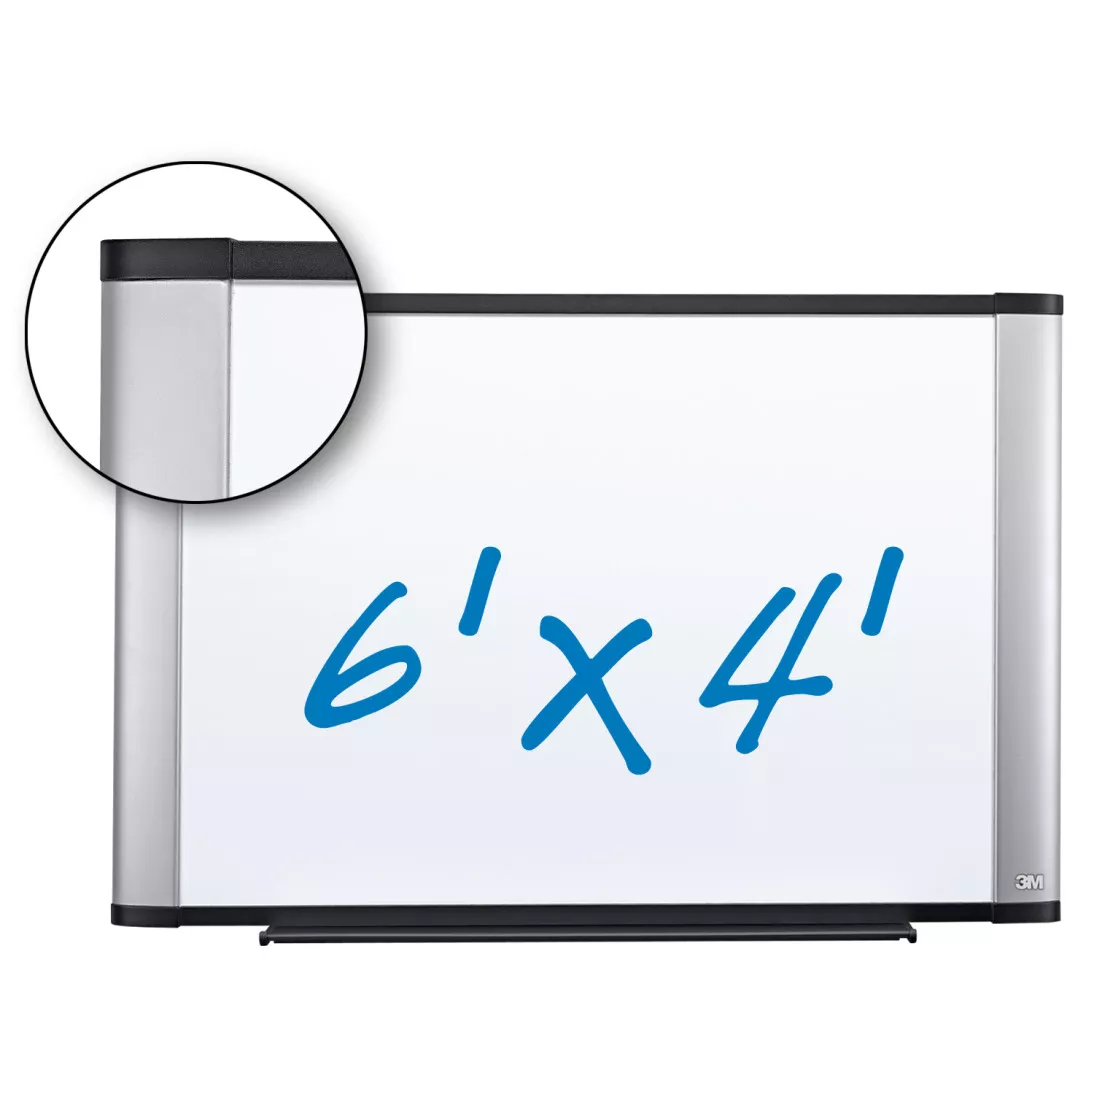 3M™ Porcelain Dry Erase Board P7248A, 72 in x 48 in x 1 in (182.8 cm x
121.9 cm x 2.5 cm) Magnetic